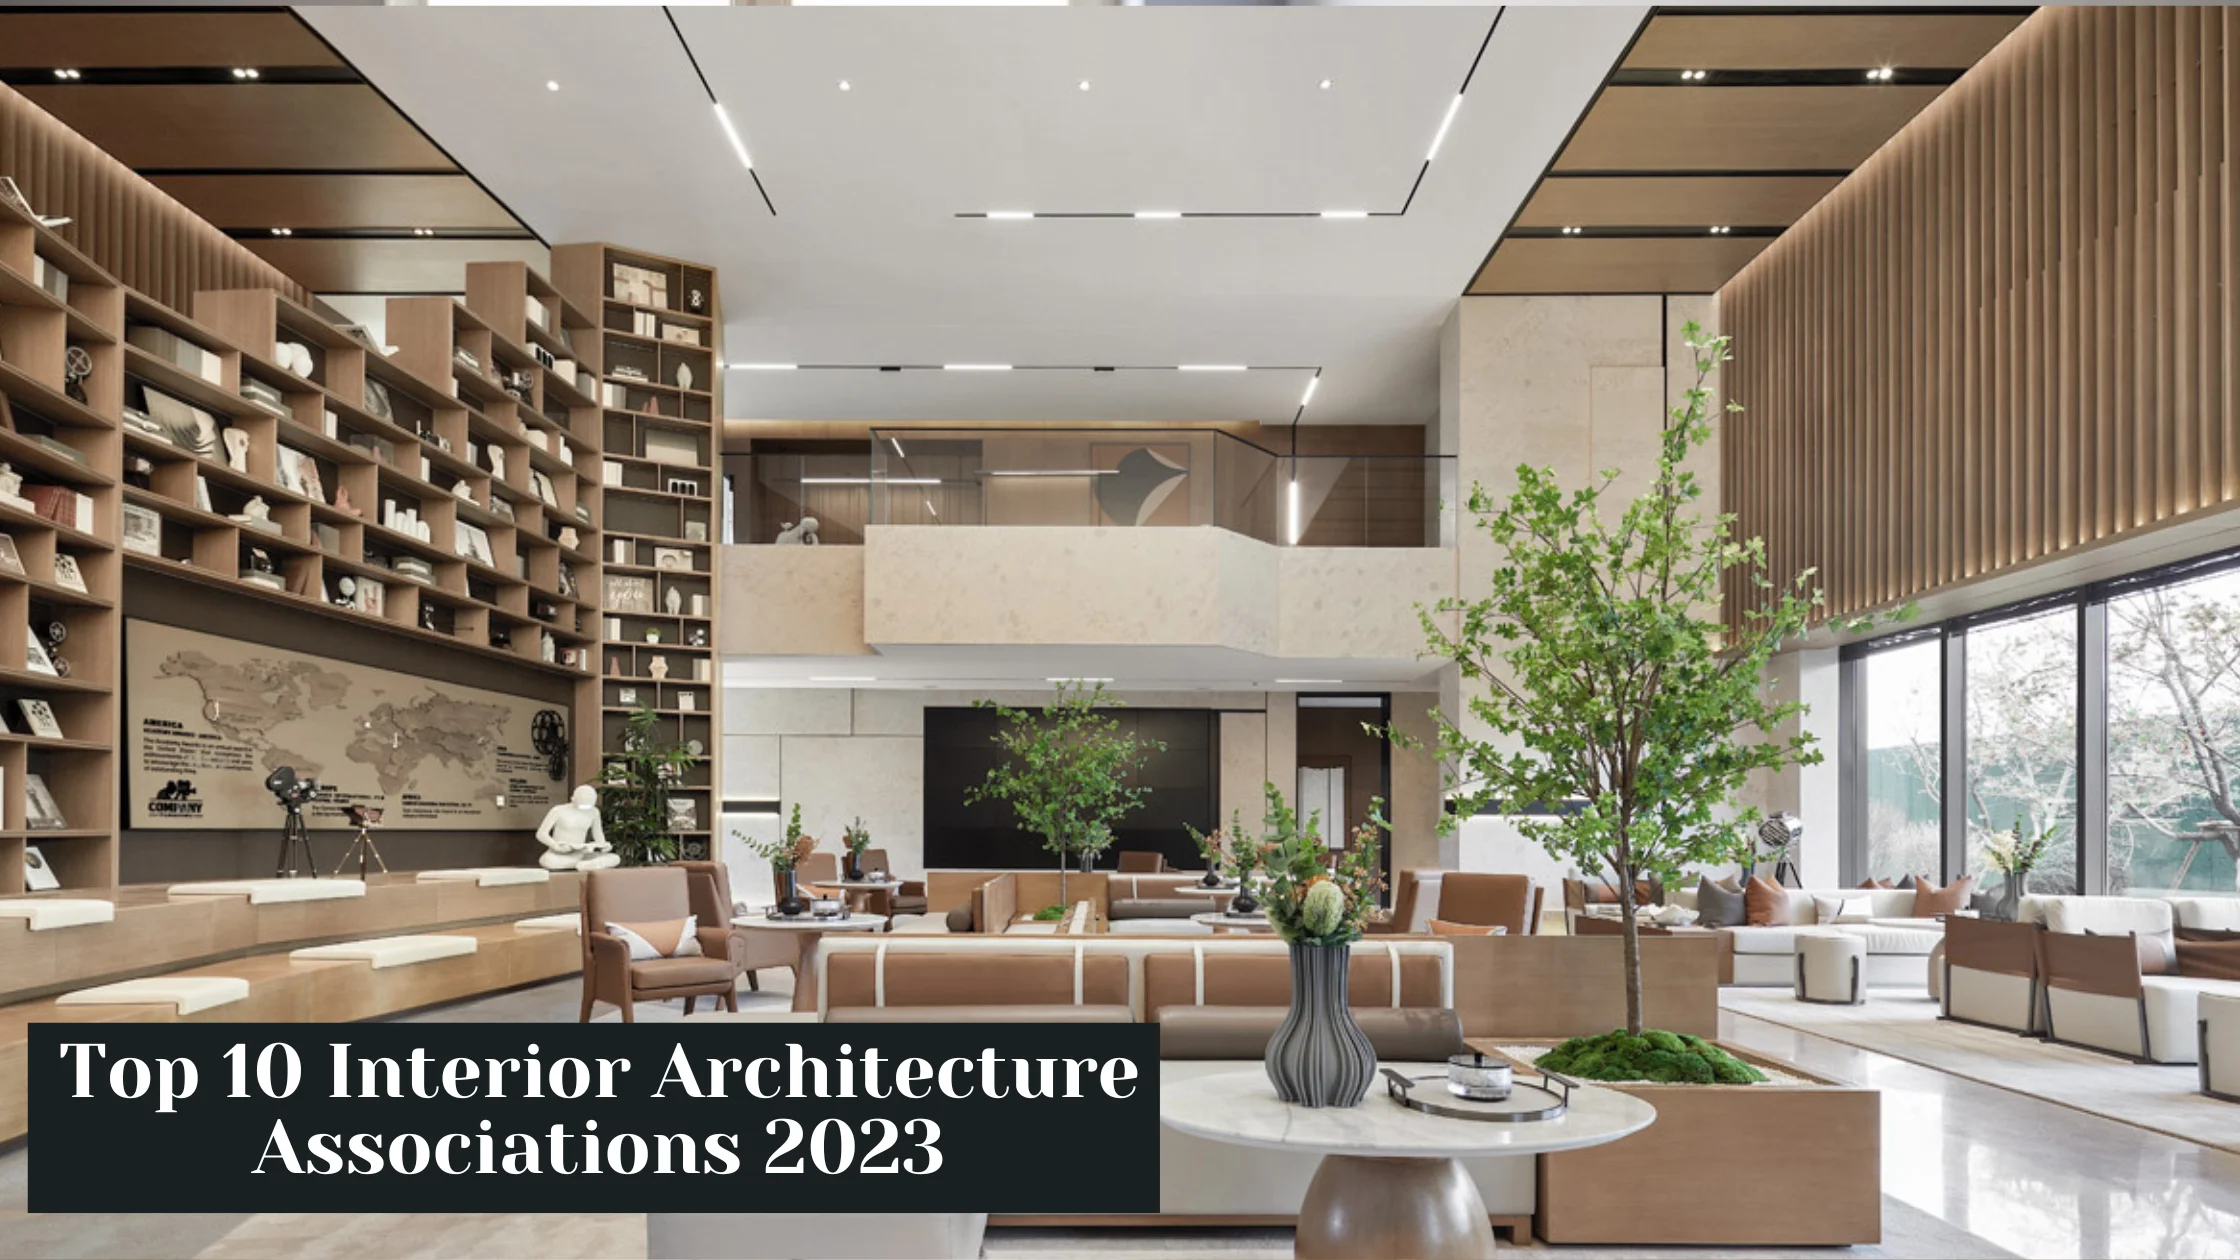 Top 10 Interior Architecture Associations 2023